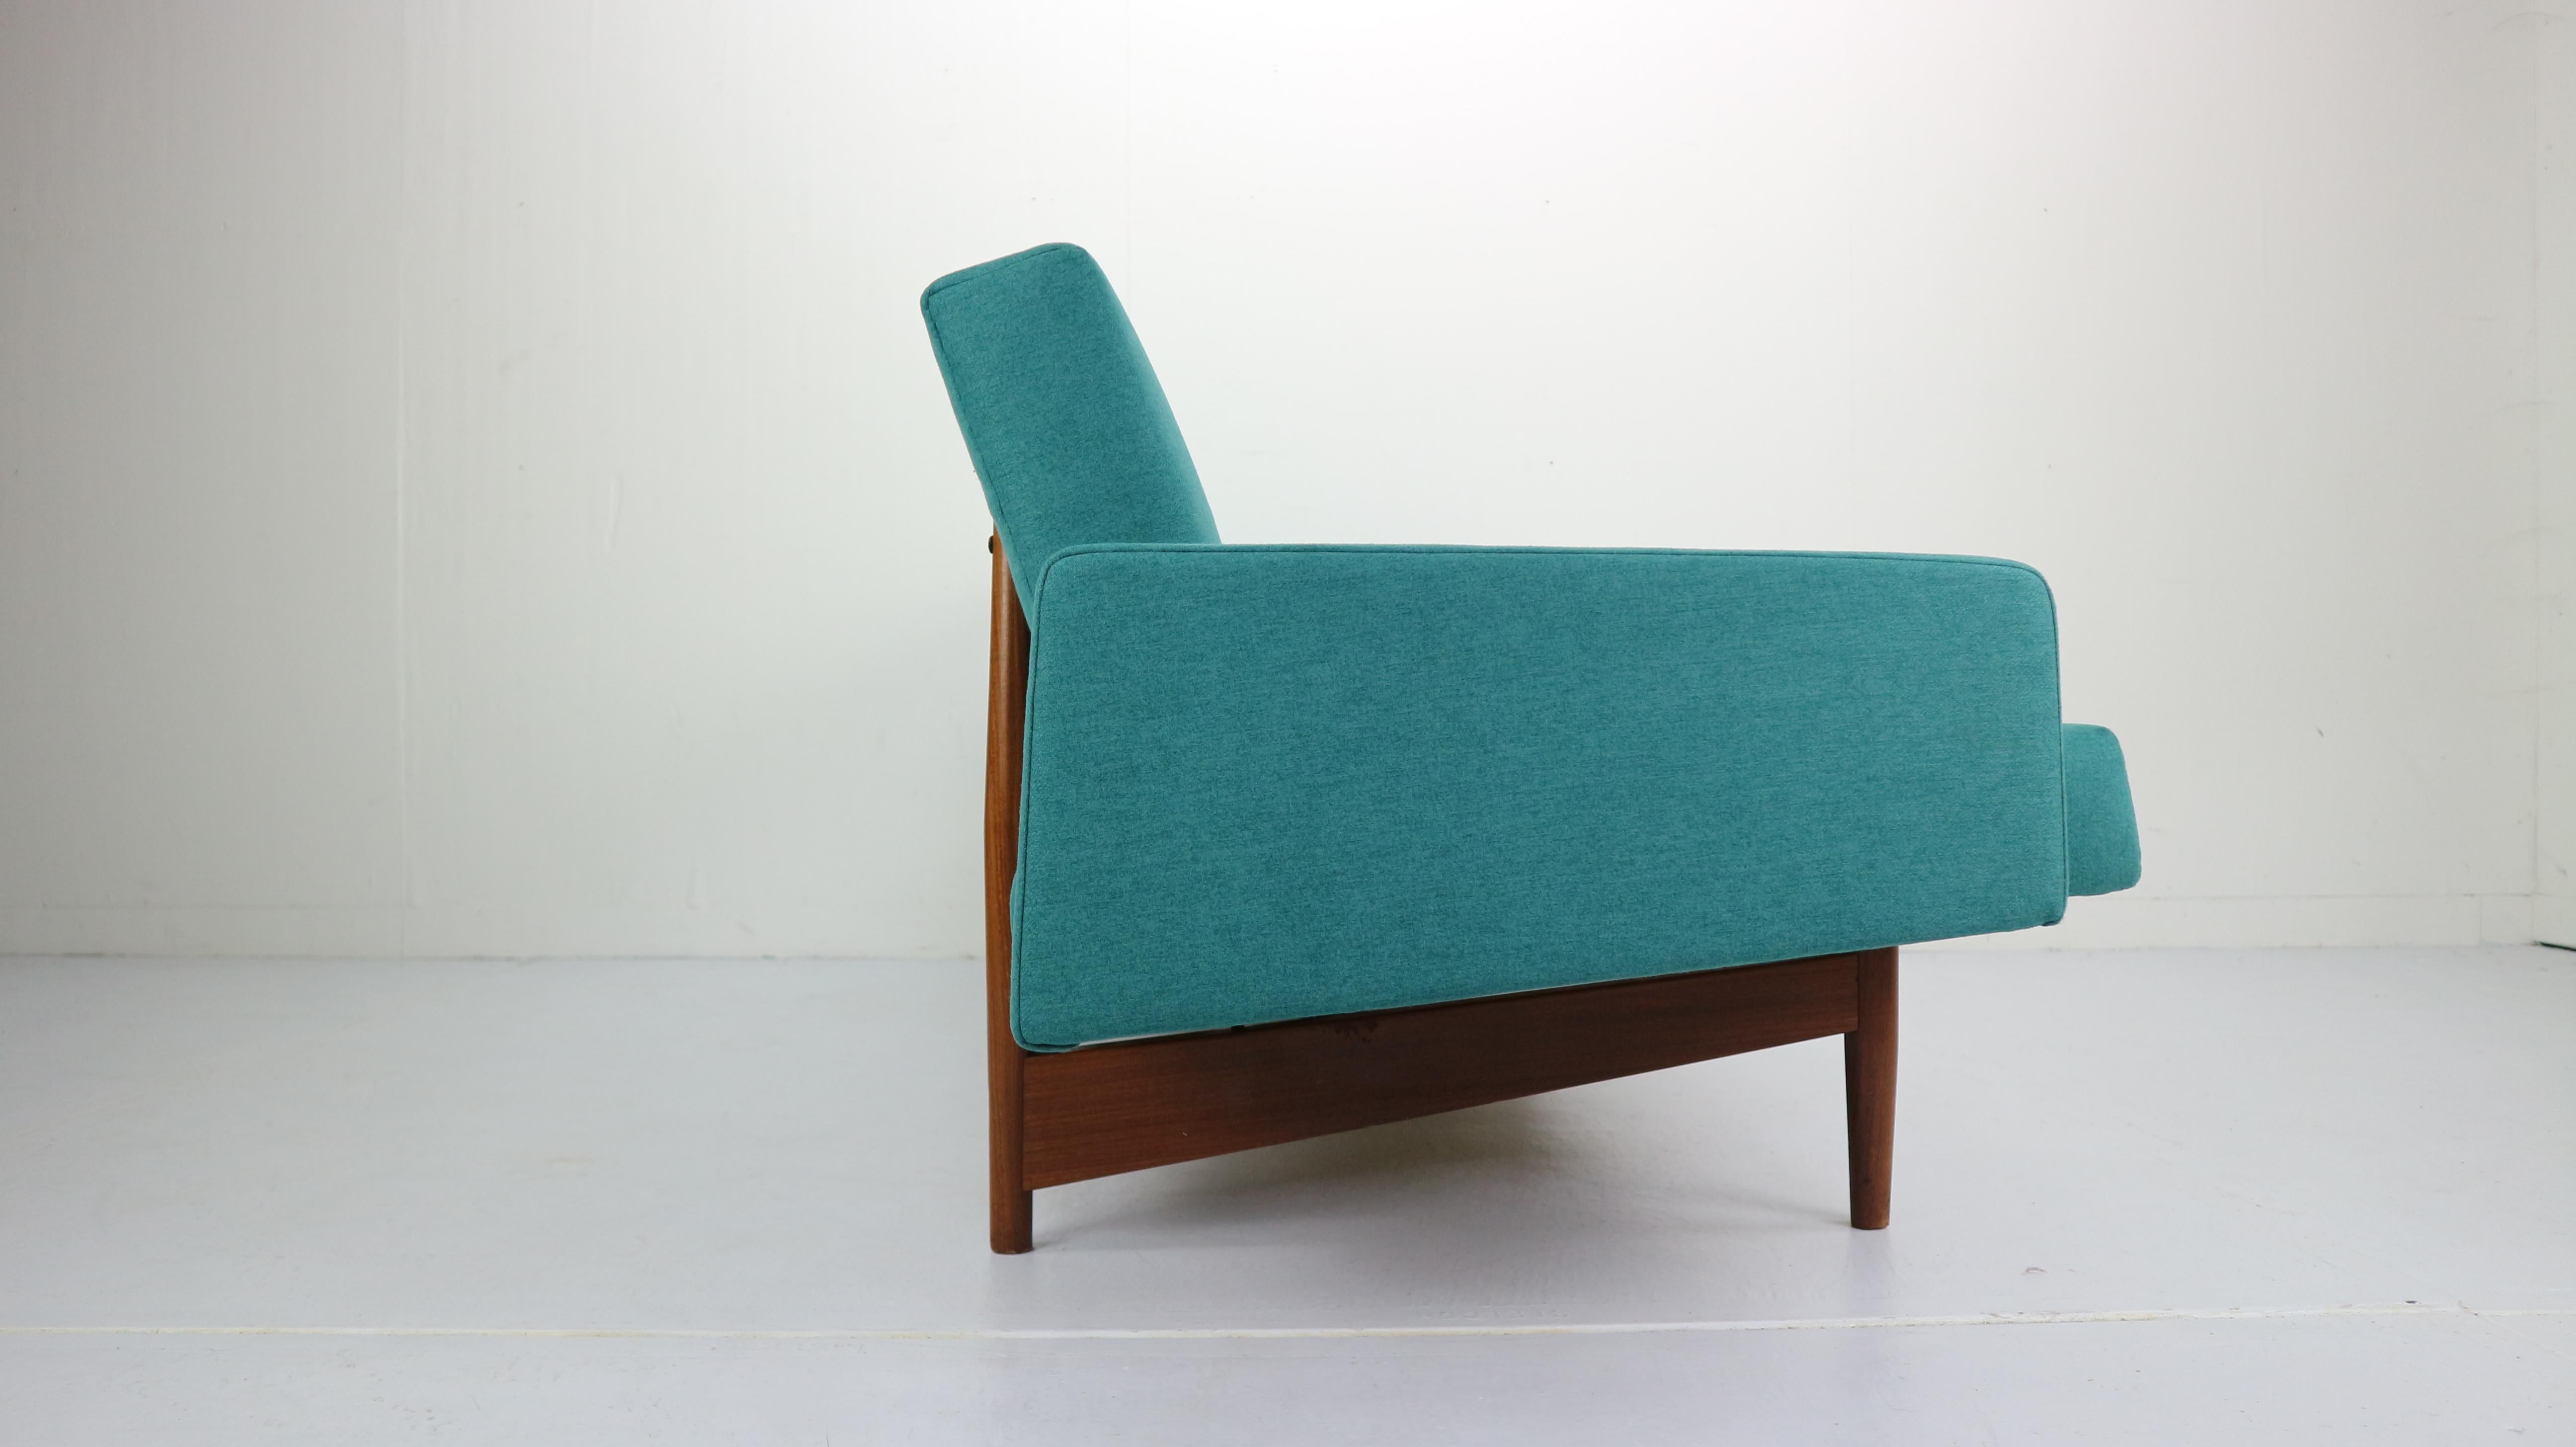 Fabric Rob Parry Sleepers Sofa for Gelderland, Dutch Modern Design, 1960s